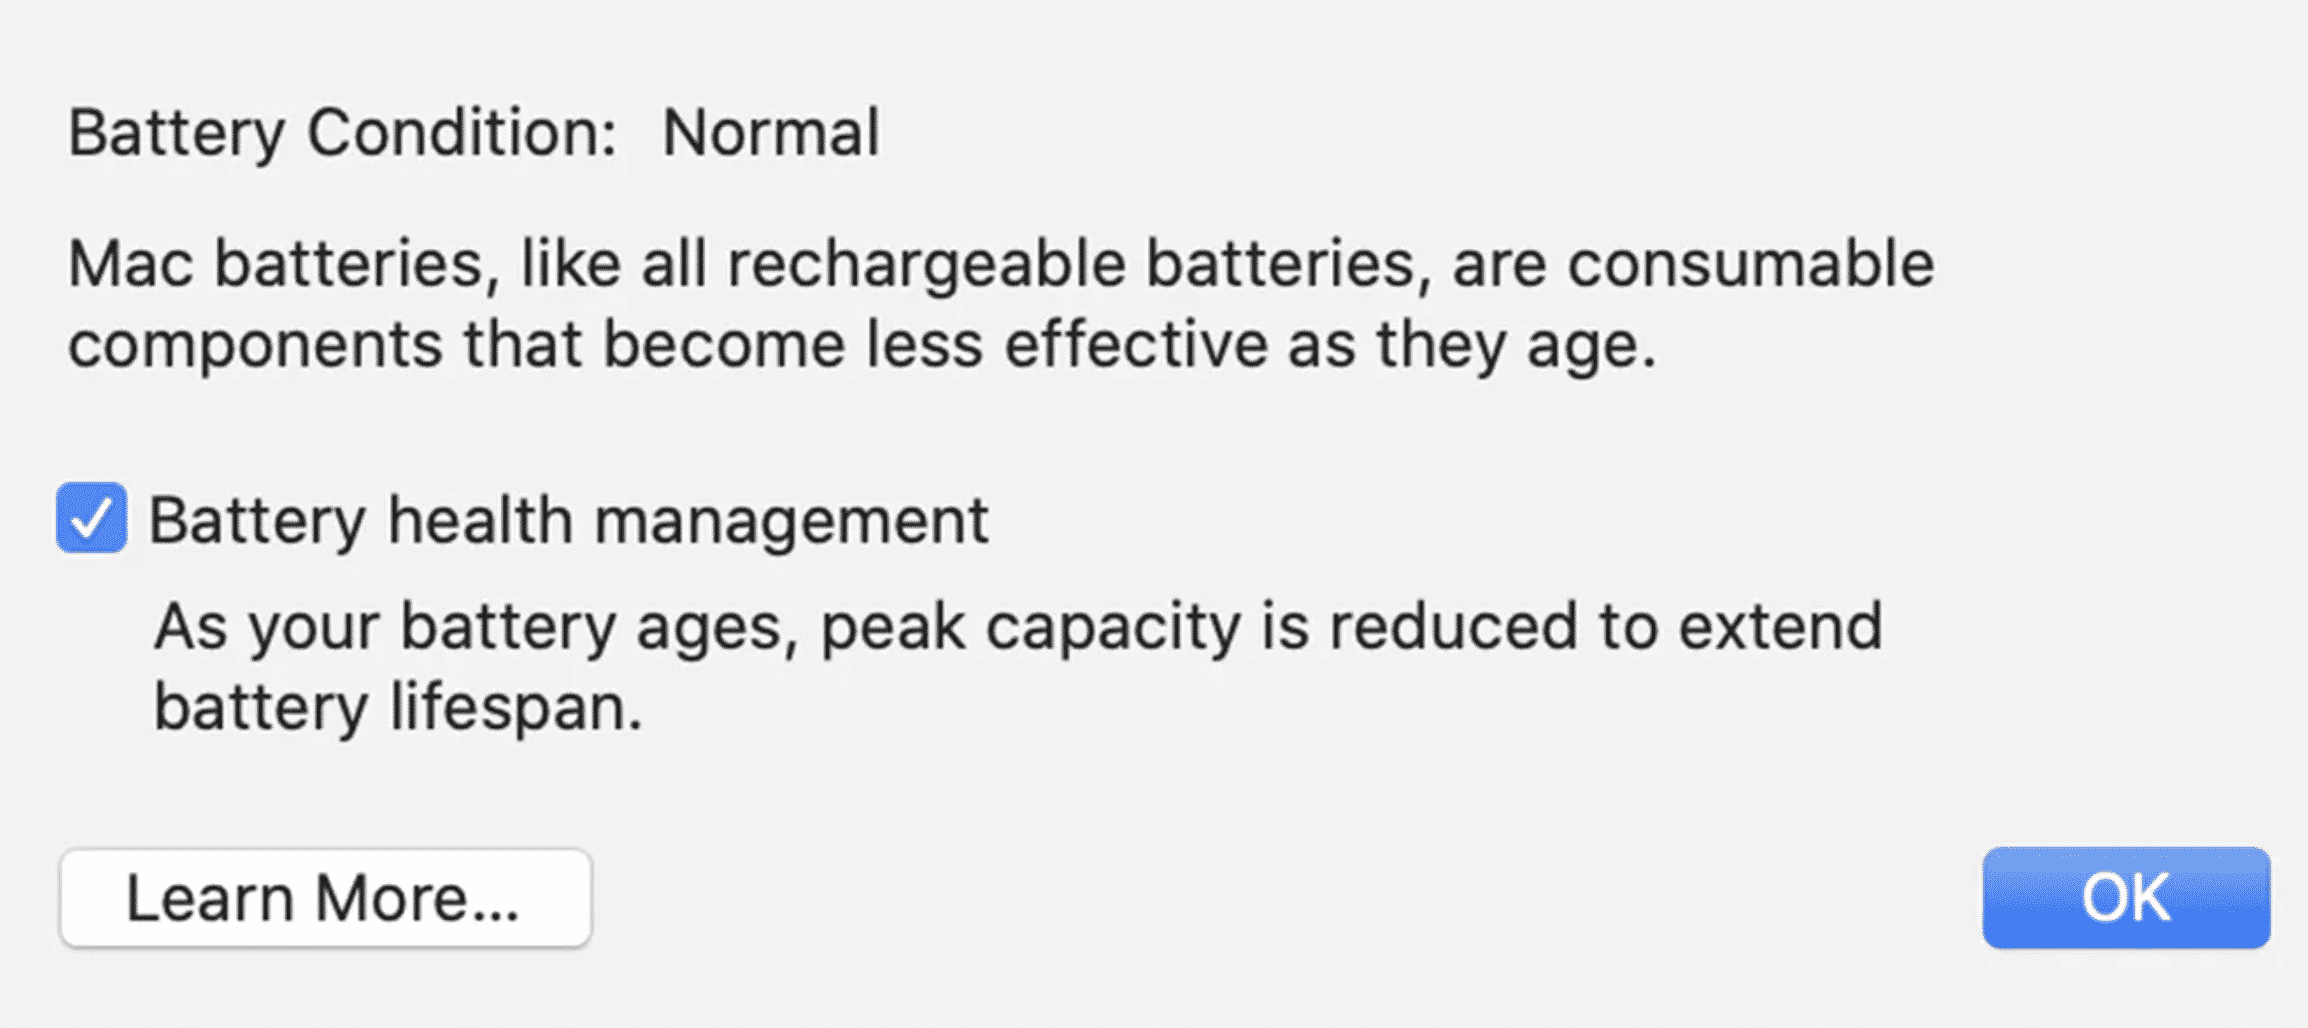 Battery Health Management